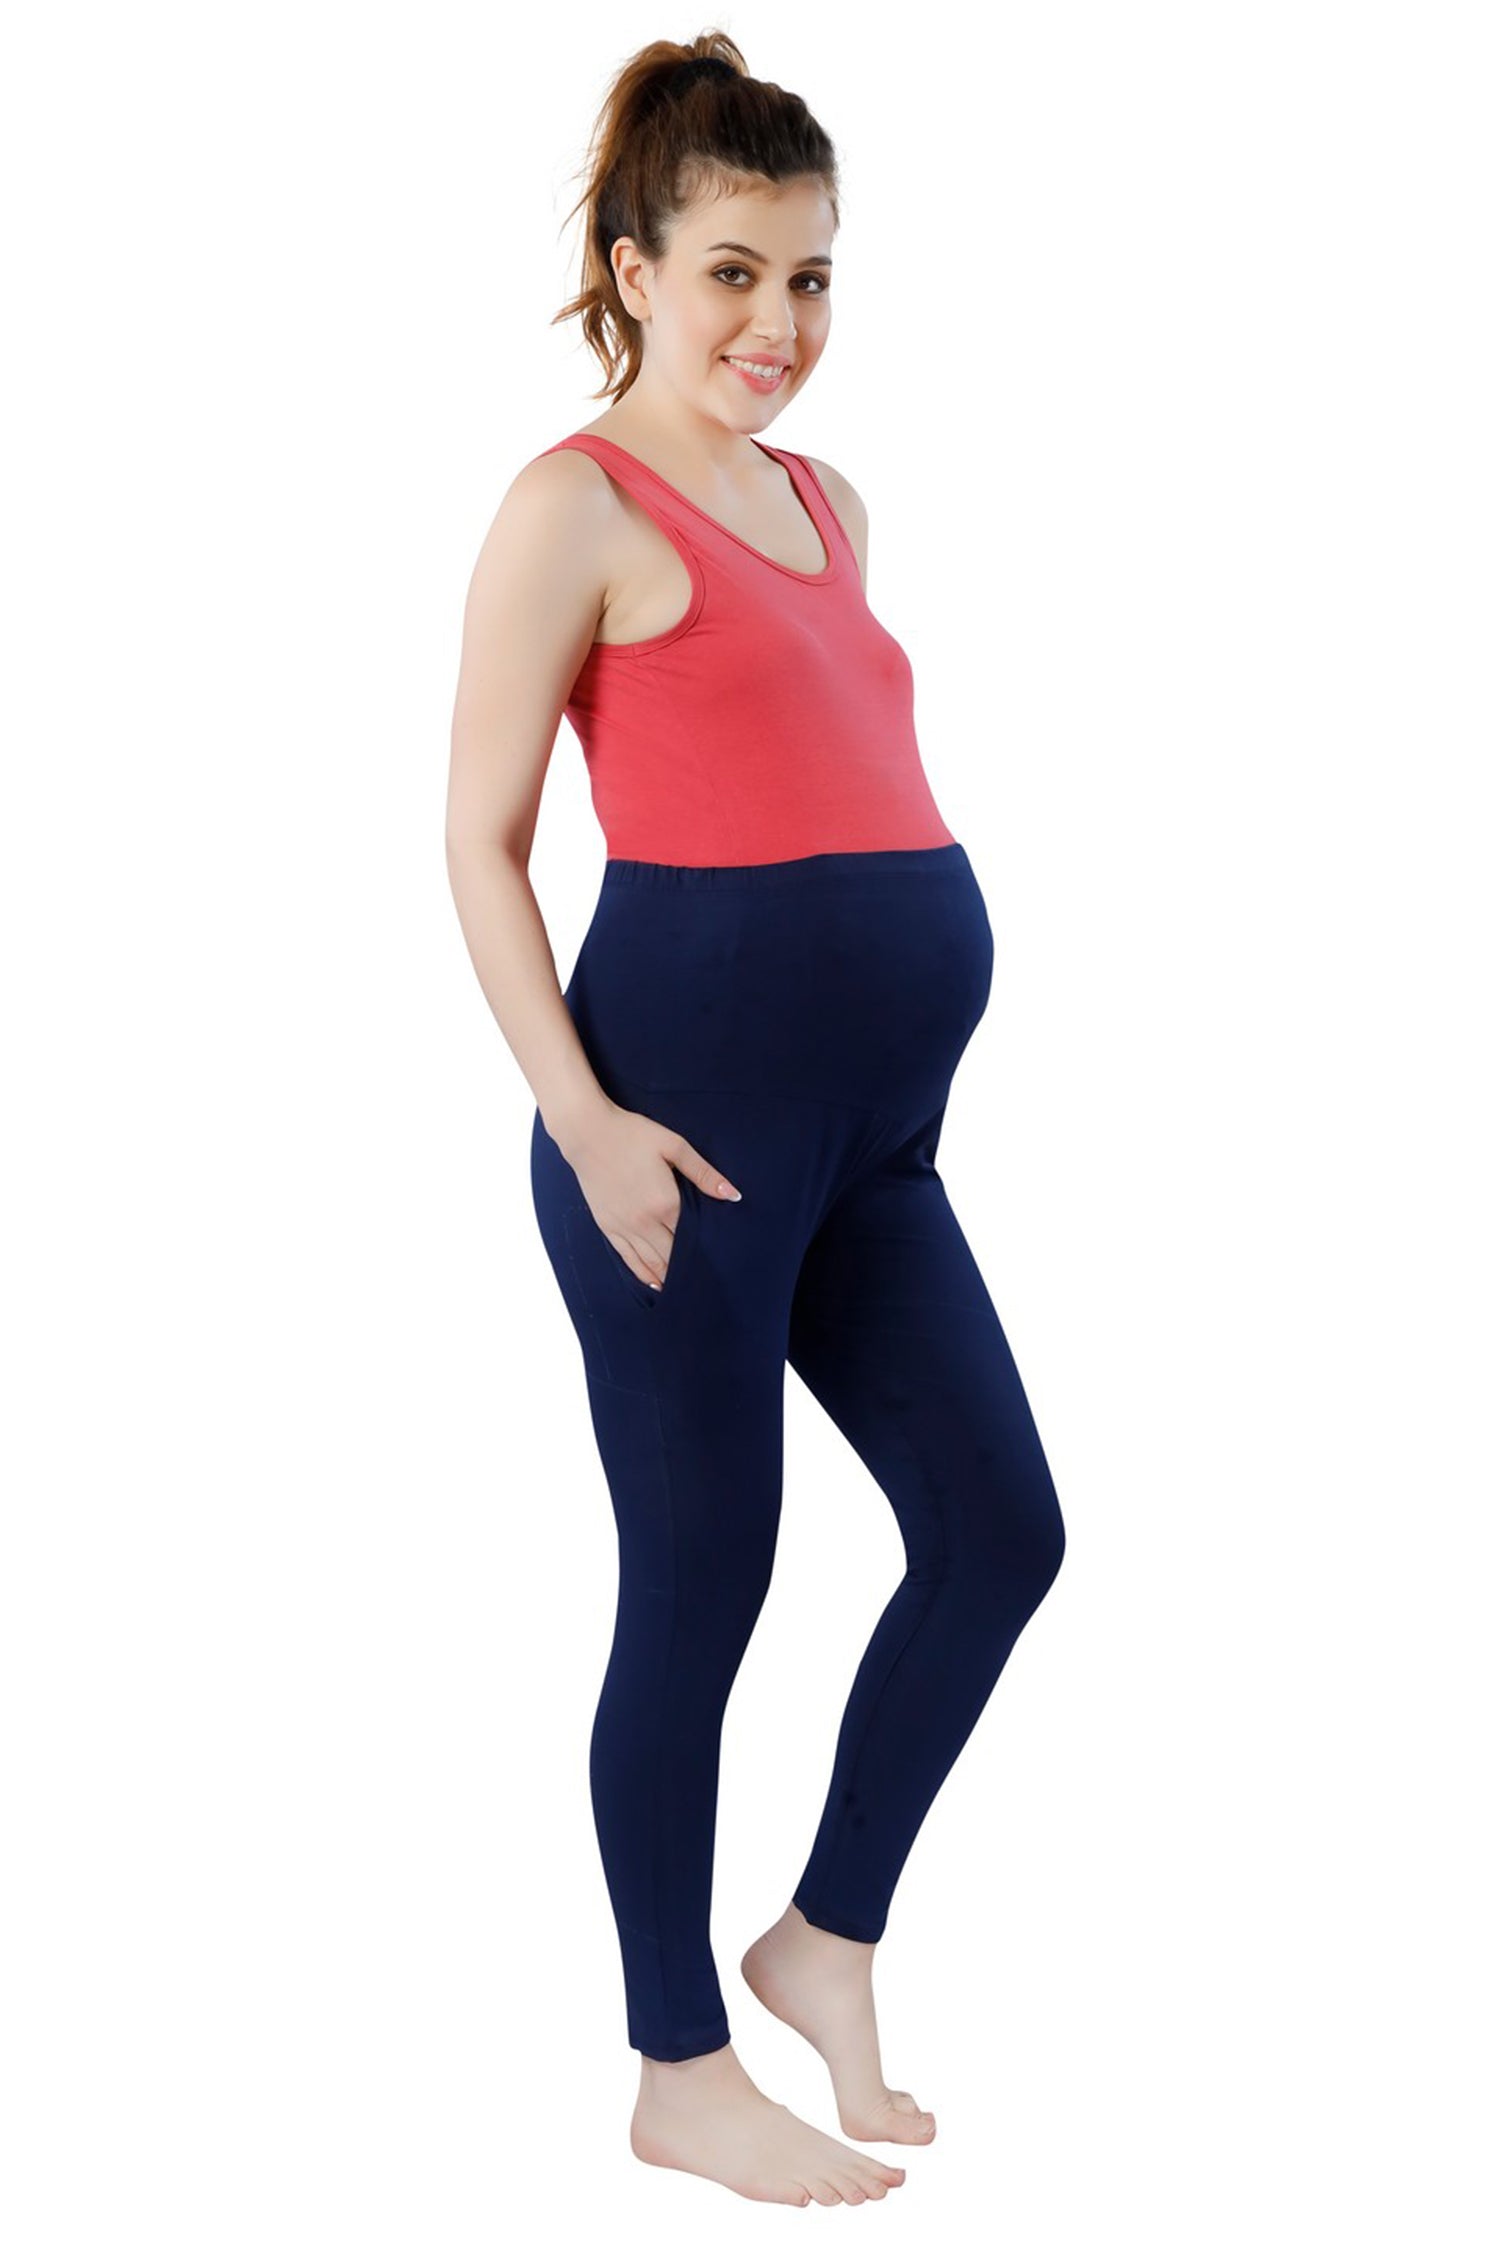 TRASA Women's Maternity Cotton Leggings Pregnancy Yoga Pants with